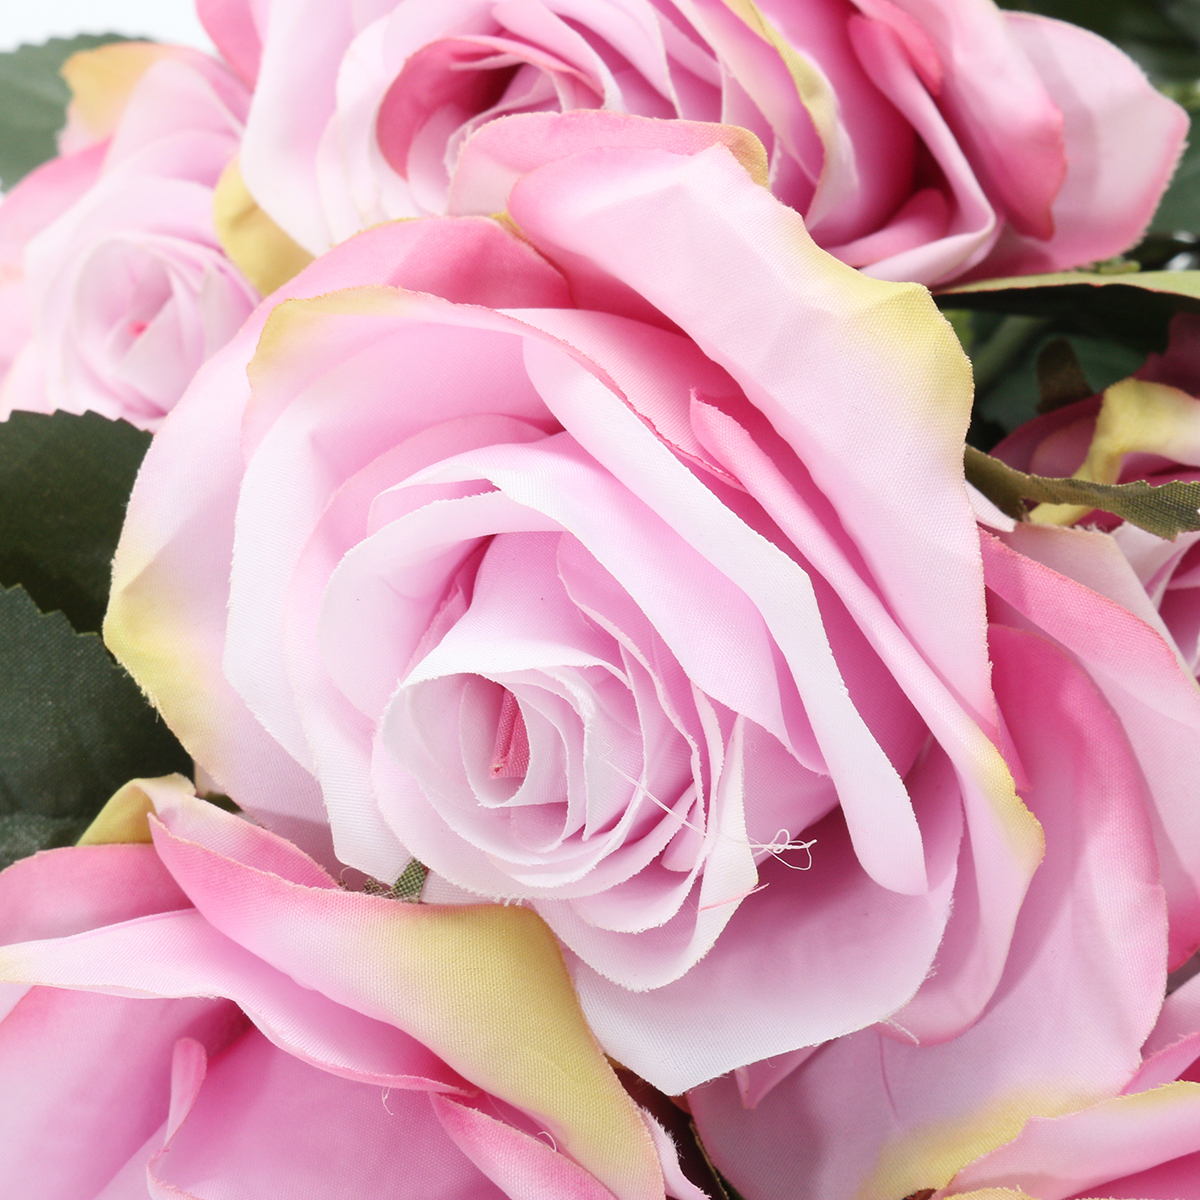 10-Head-1-Bouquet-Artificial-Flowers-Rose-Flower-Silk-Rose-Flower-Home-Room-Wedding-Party-Decor-Phot-1048735-7